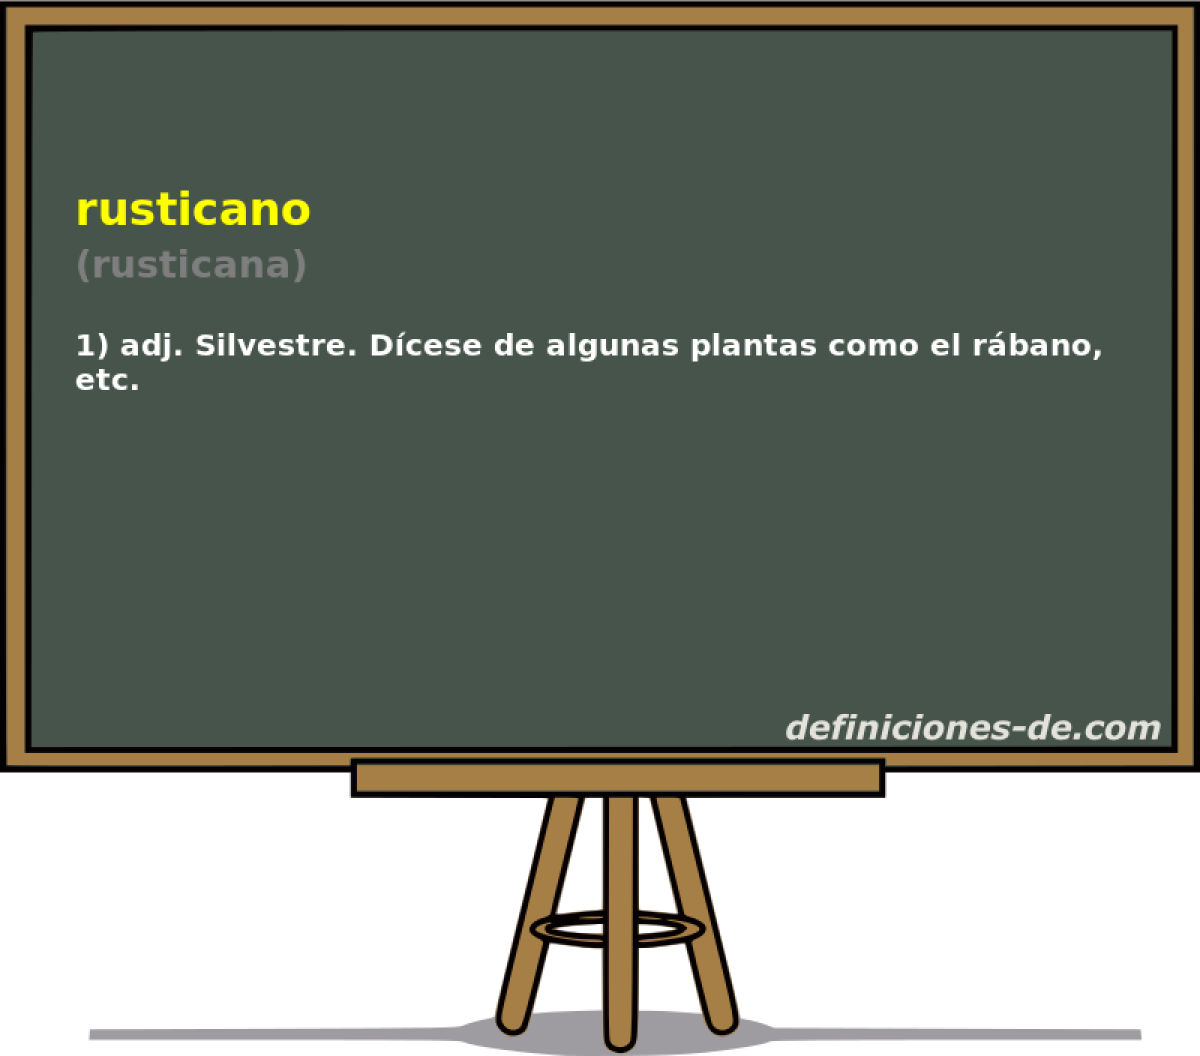 rusticano (rusticana)